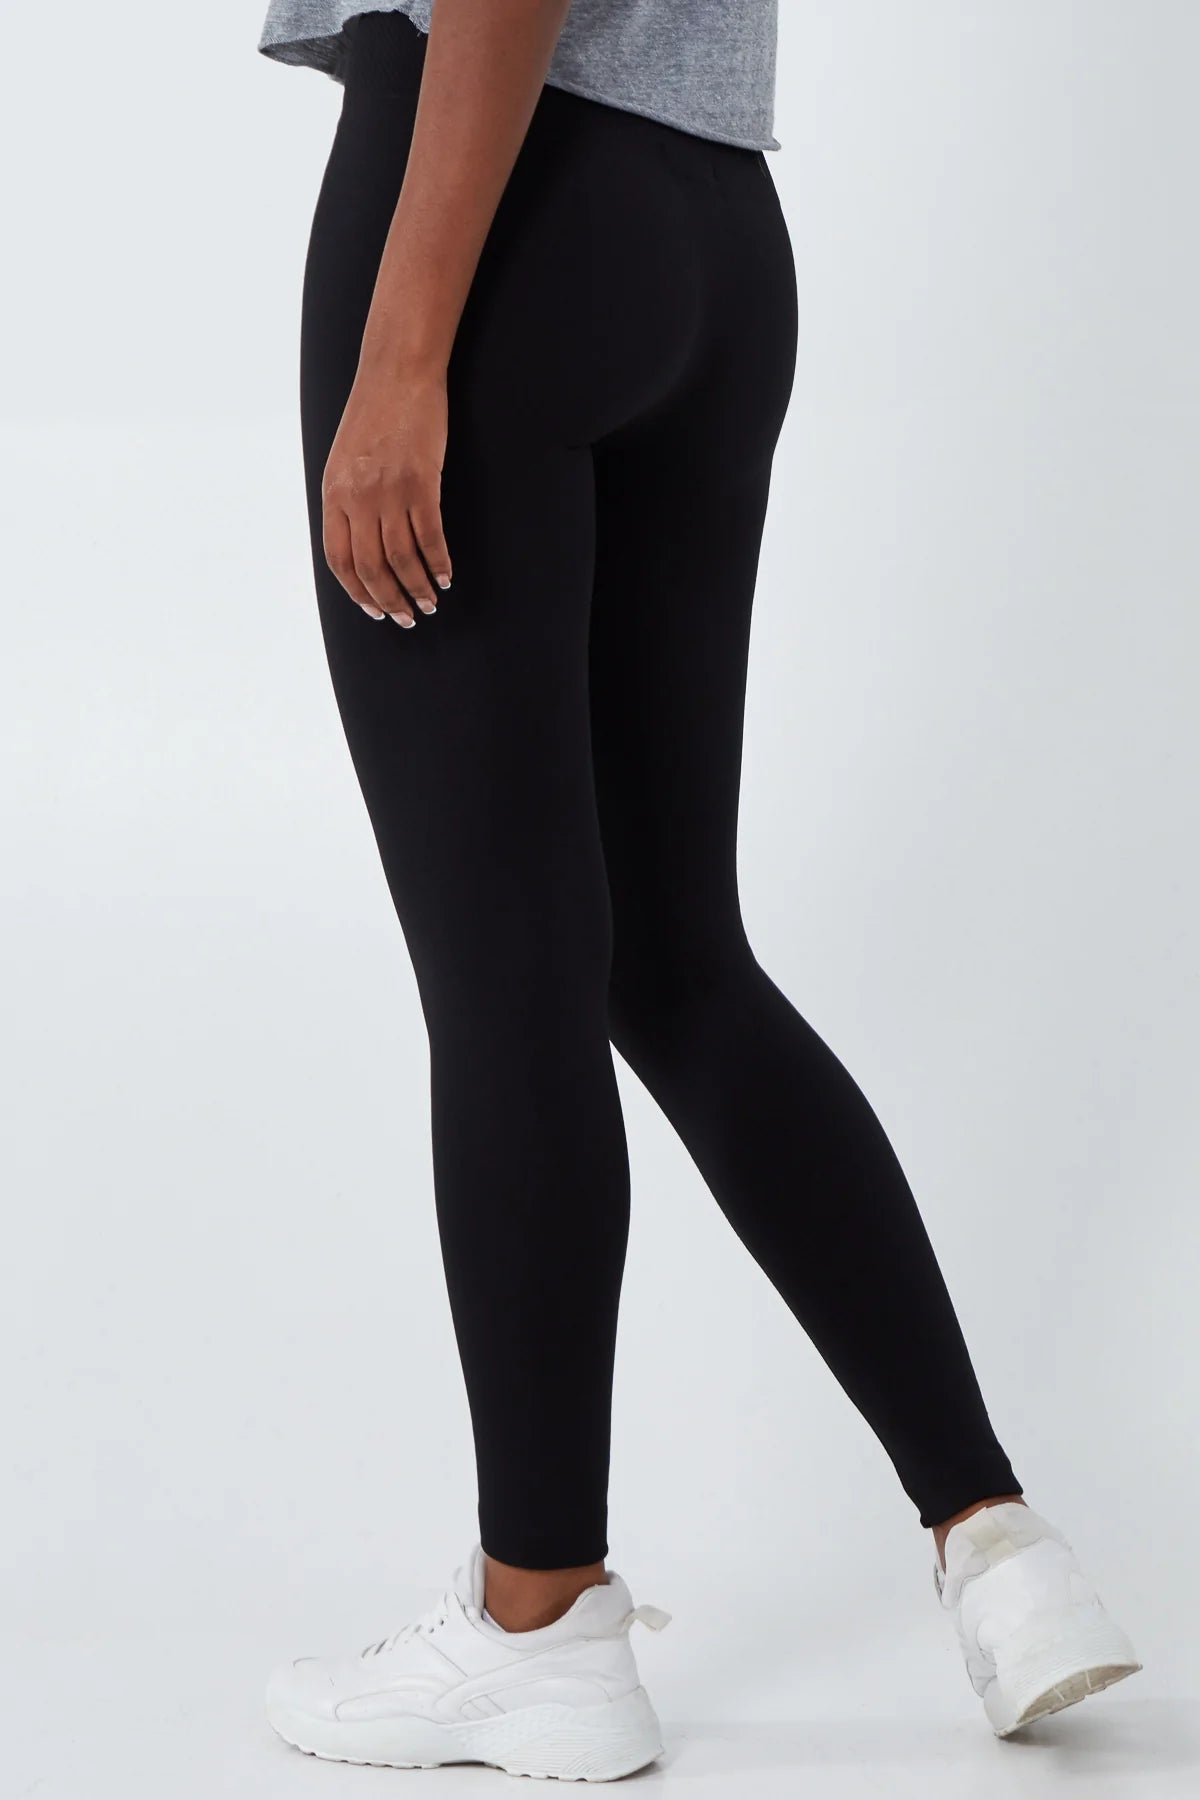 High Waisted Black Fleece Lined Leggings – Style for your Shape